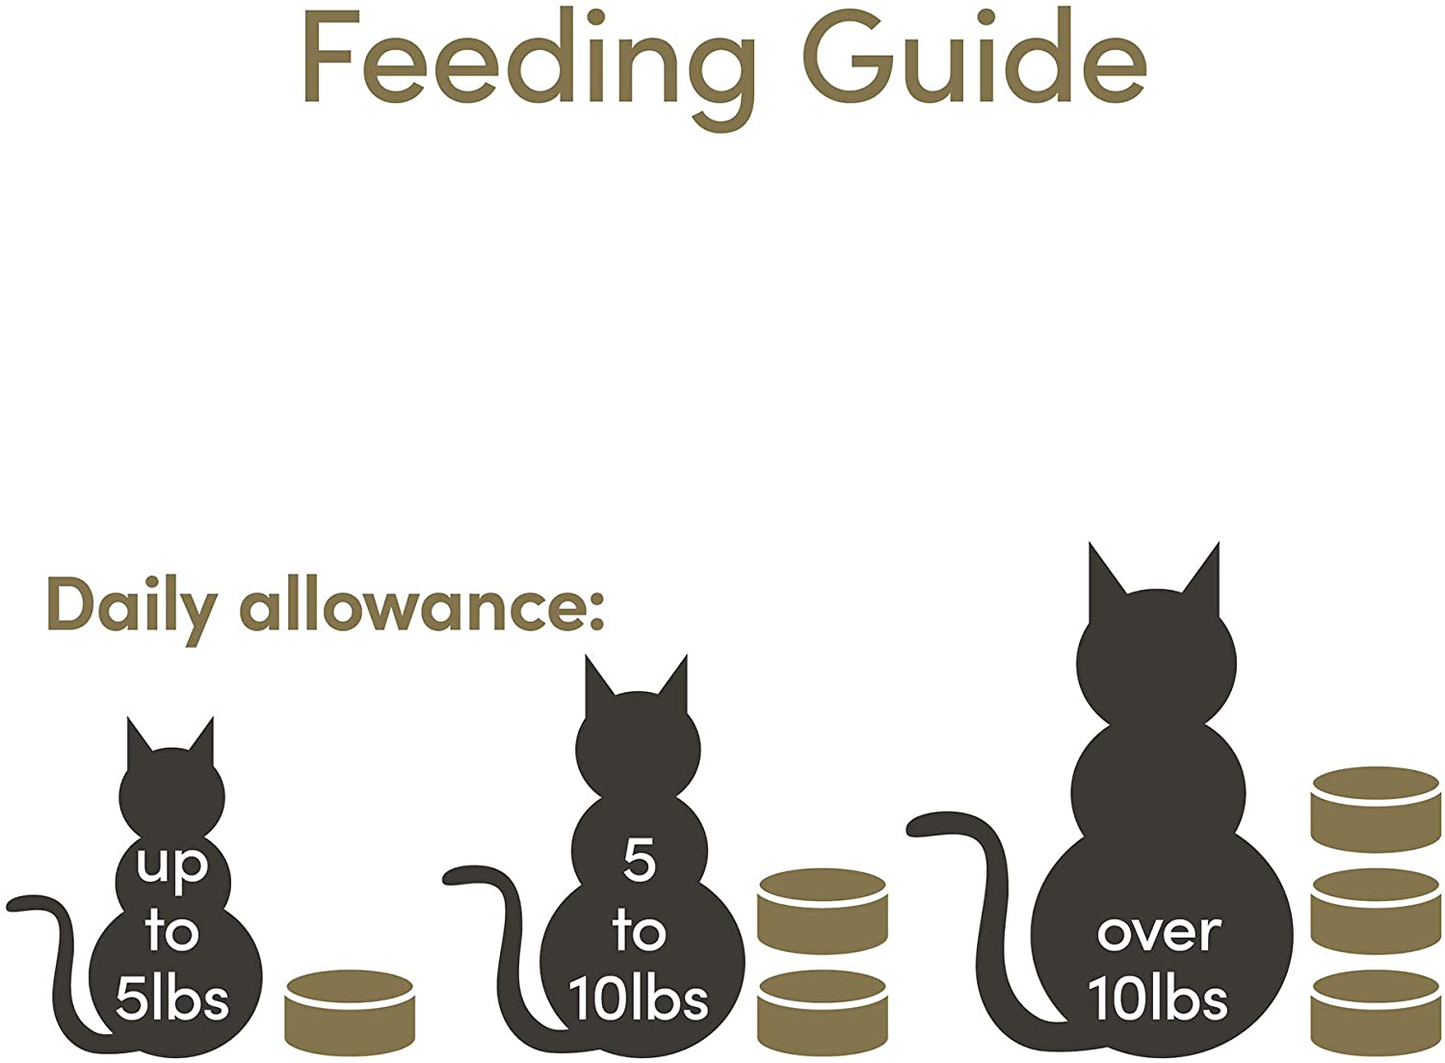 Applaws Natural Tuna Fillet in Broth Wet Cat Food Animals & Pet Supplies > Pet Supplies > Cat Supplies > Cat Treats Applaws   